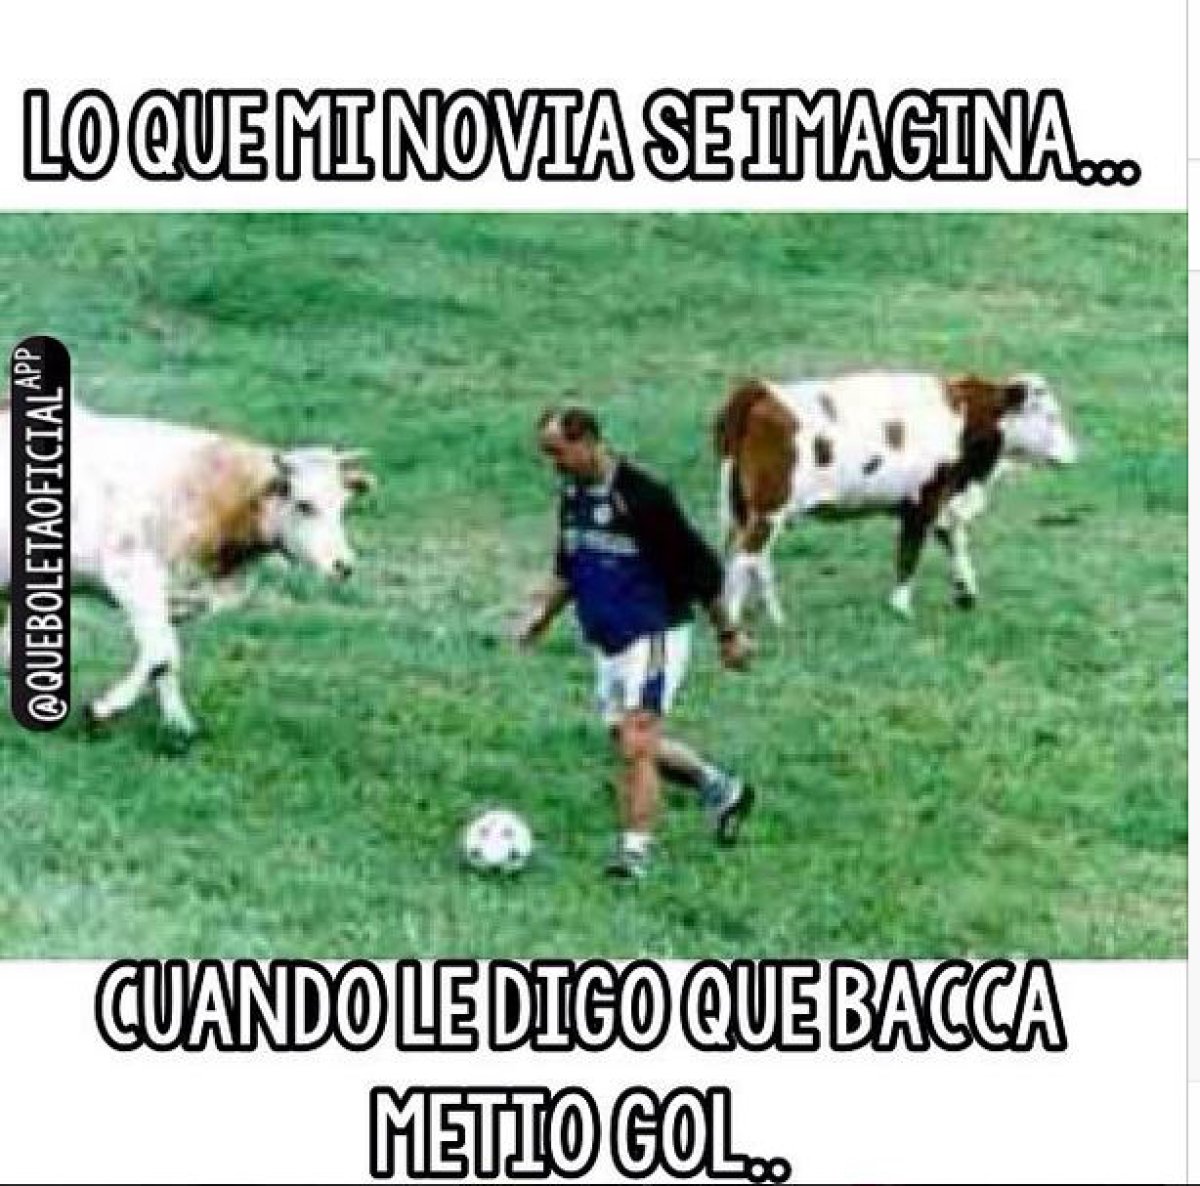 Los mejores memes burlándose de Van Gaal por goles de Falcao